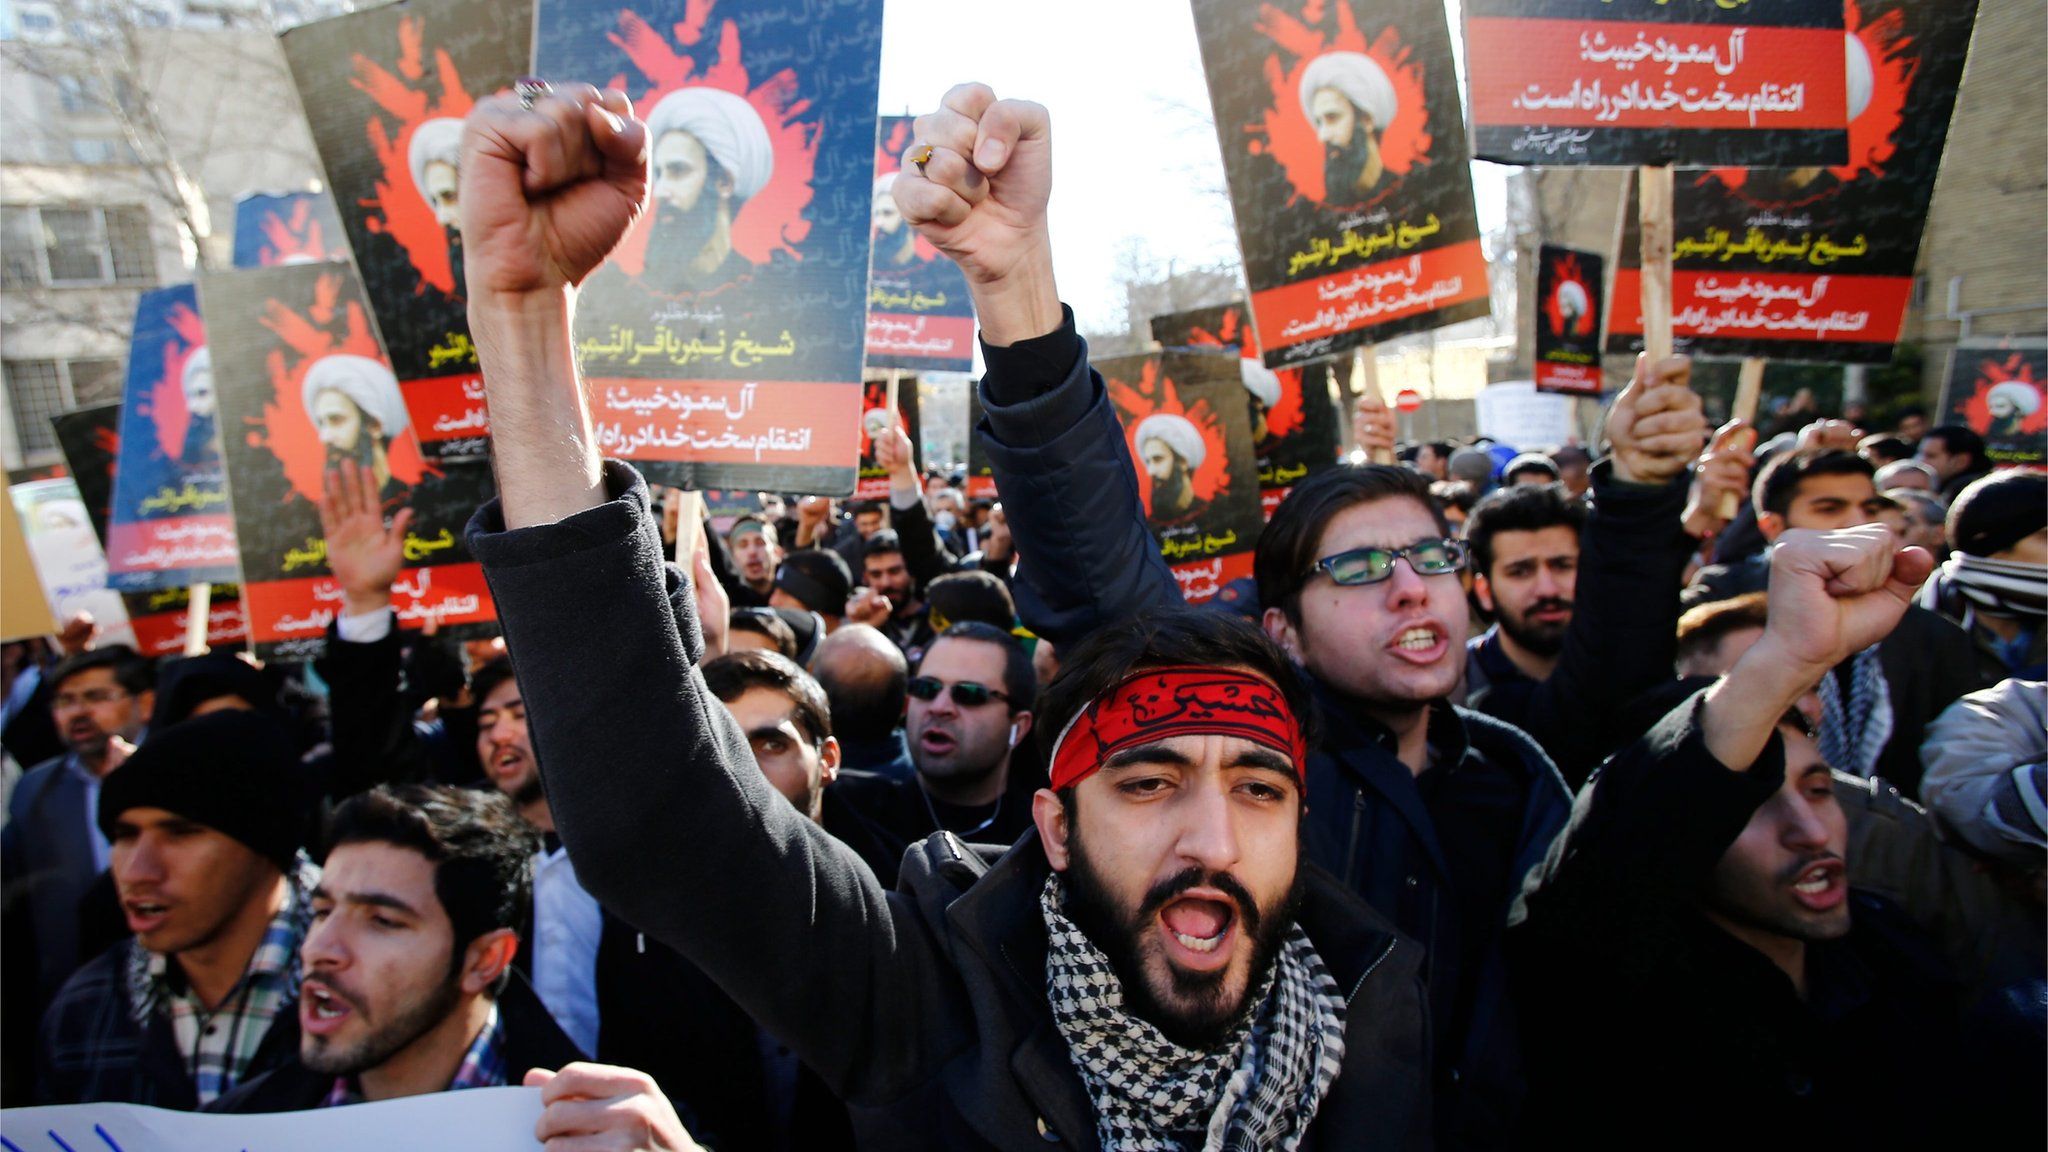 Protesters march near Saudi embassy in Tehran (03/01/16)